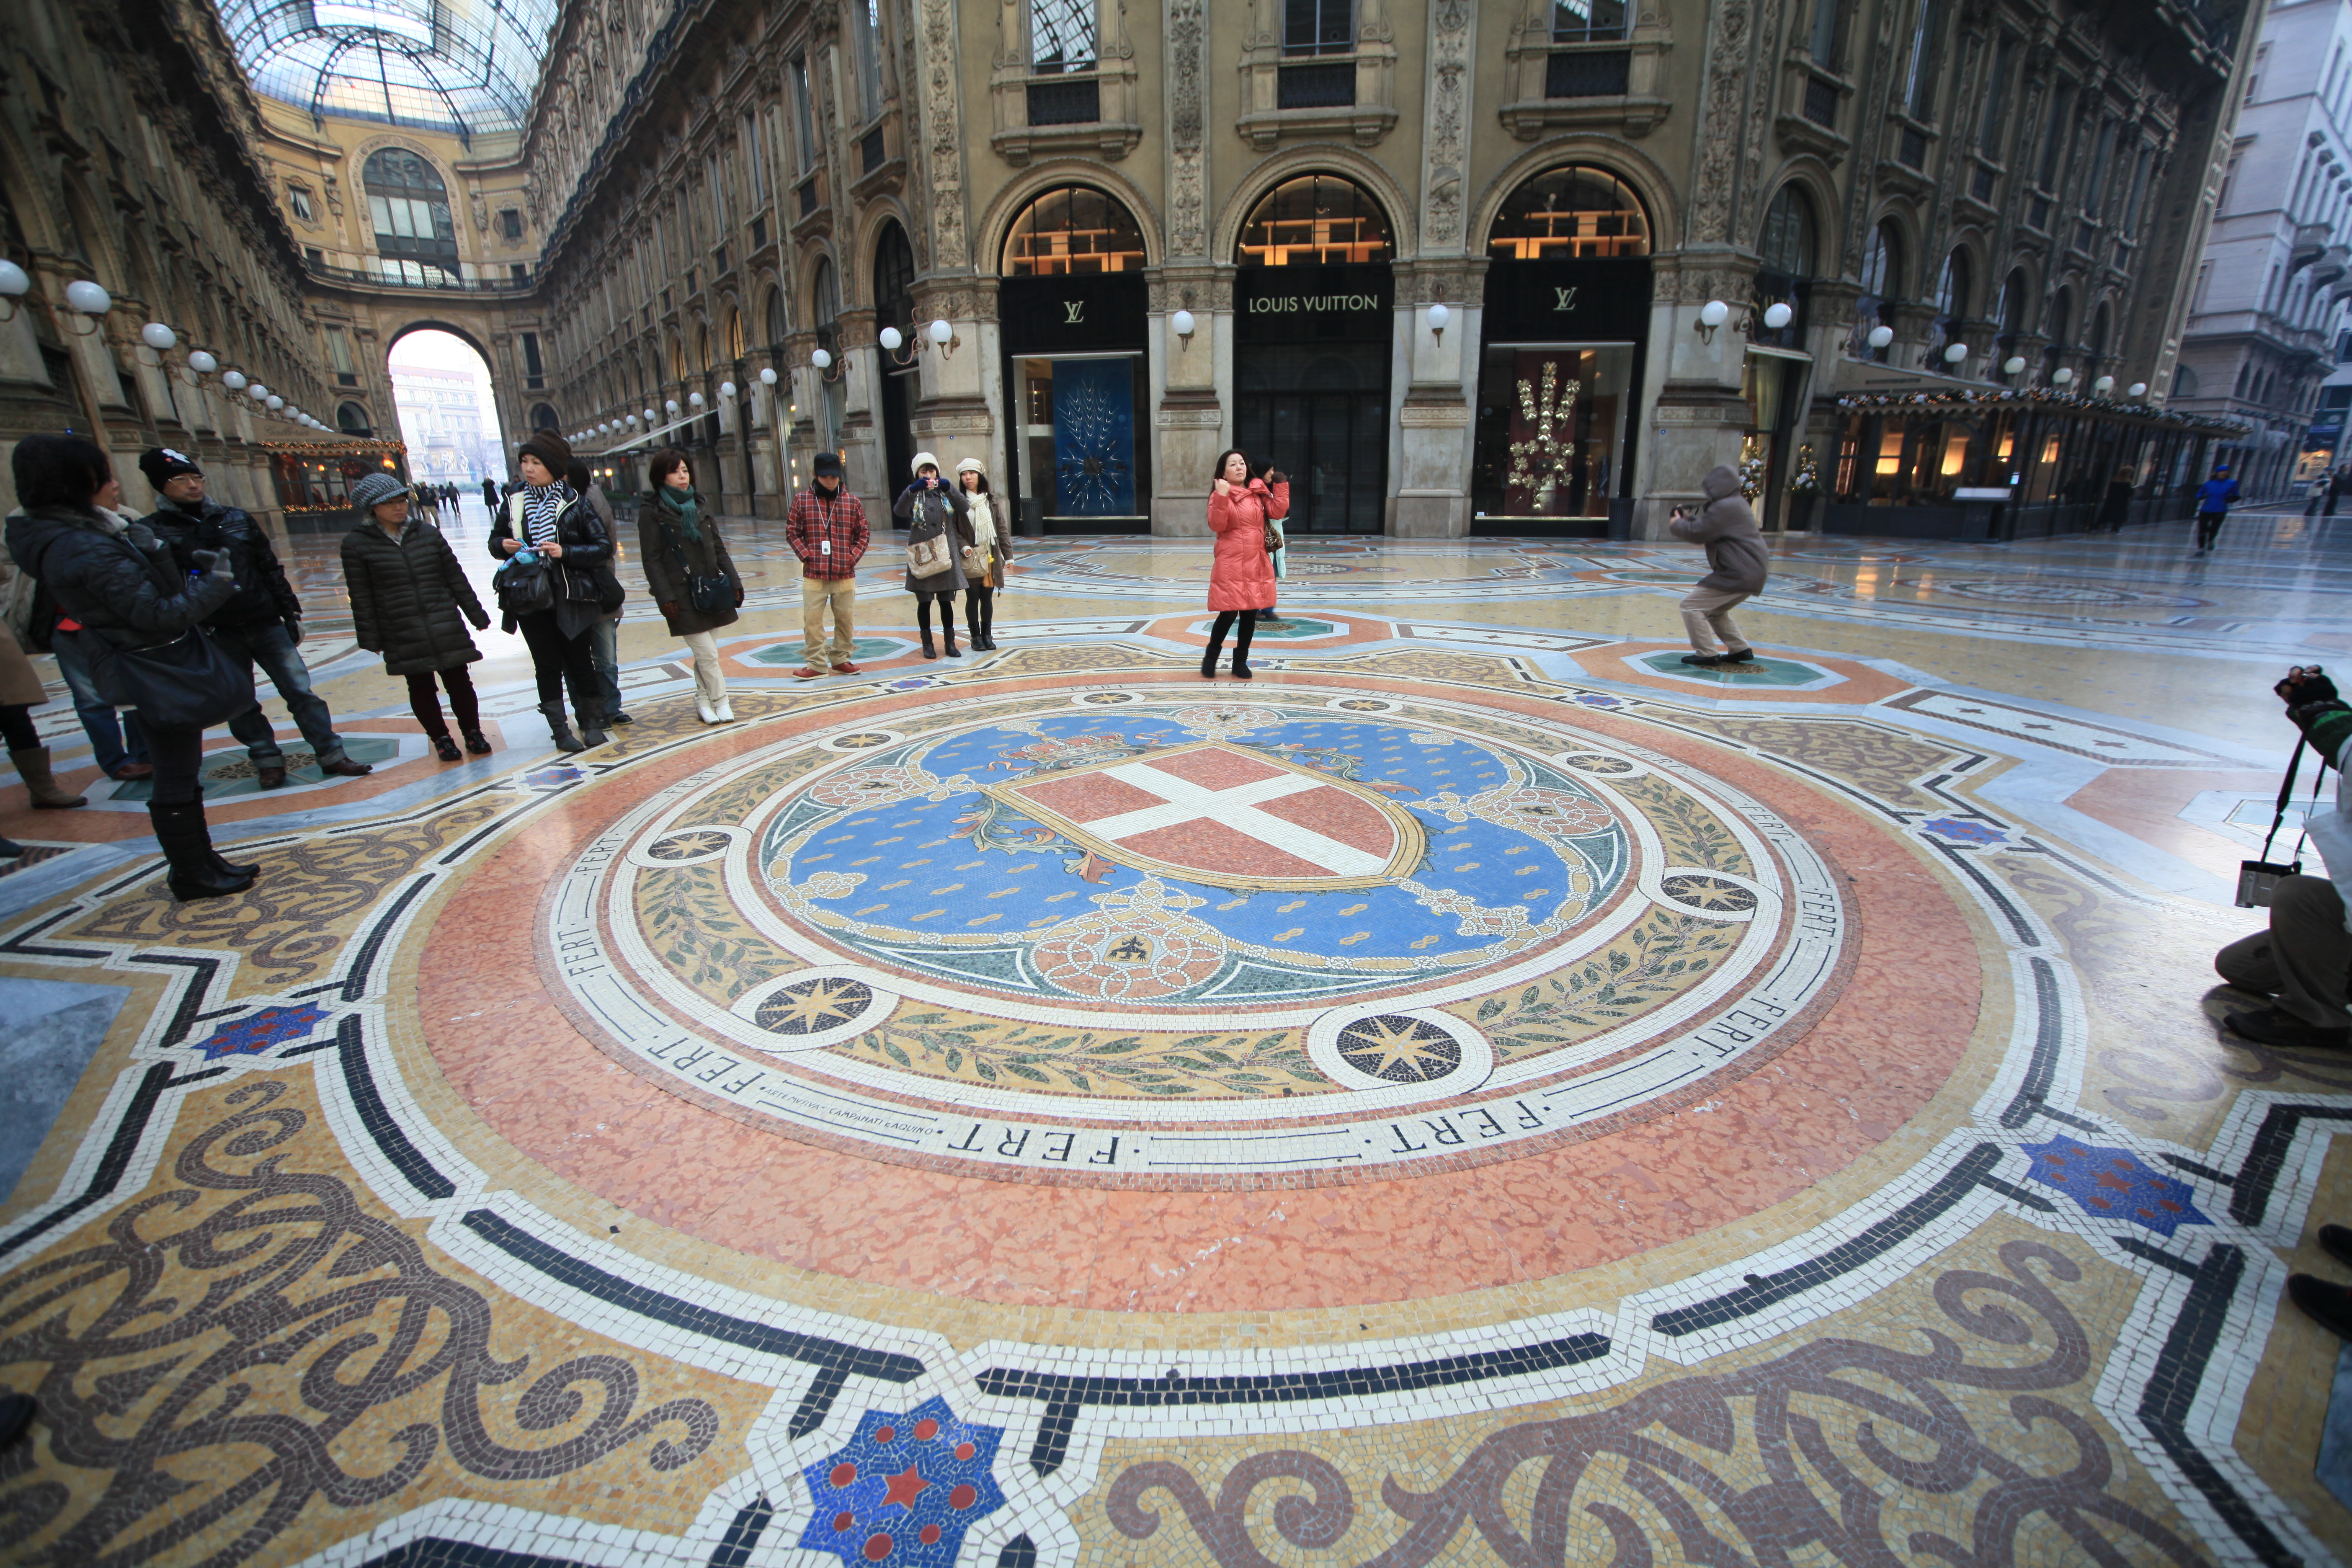 File:Louis Vuitton, Galleria Vittorio Emanuele II.jpg - Wikipedia